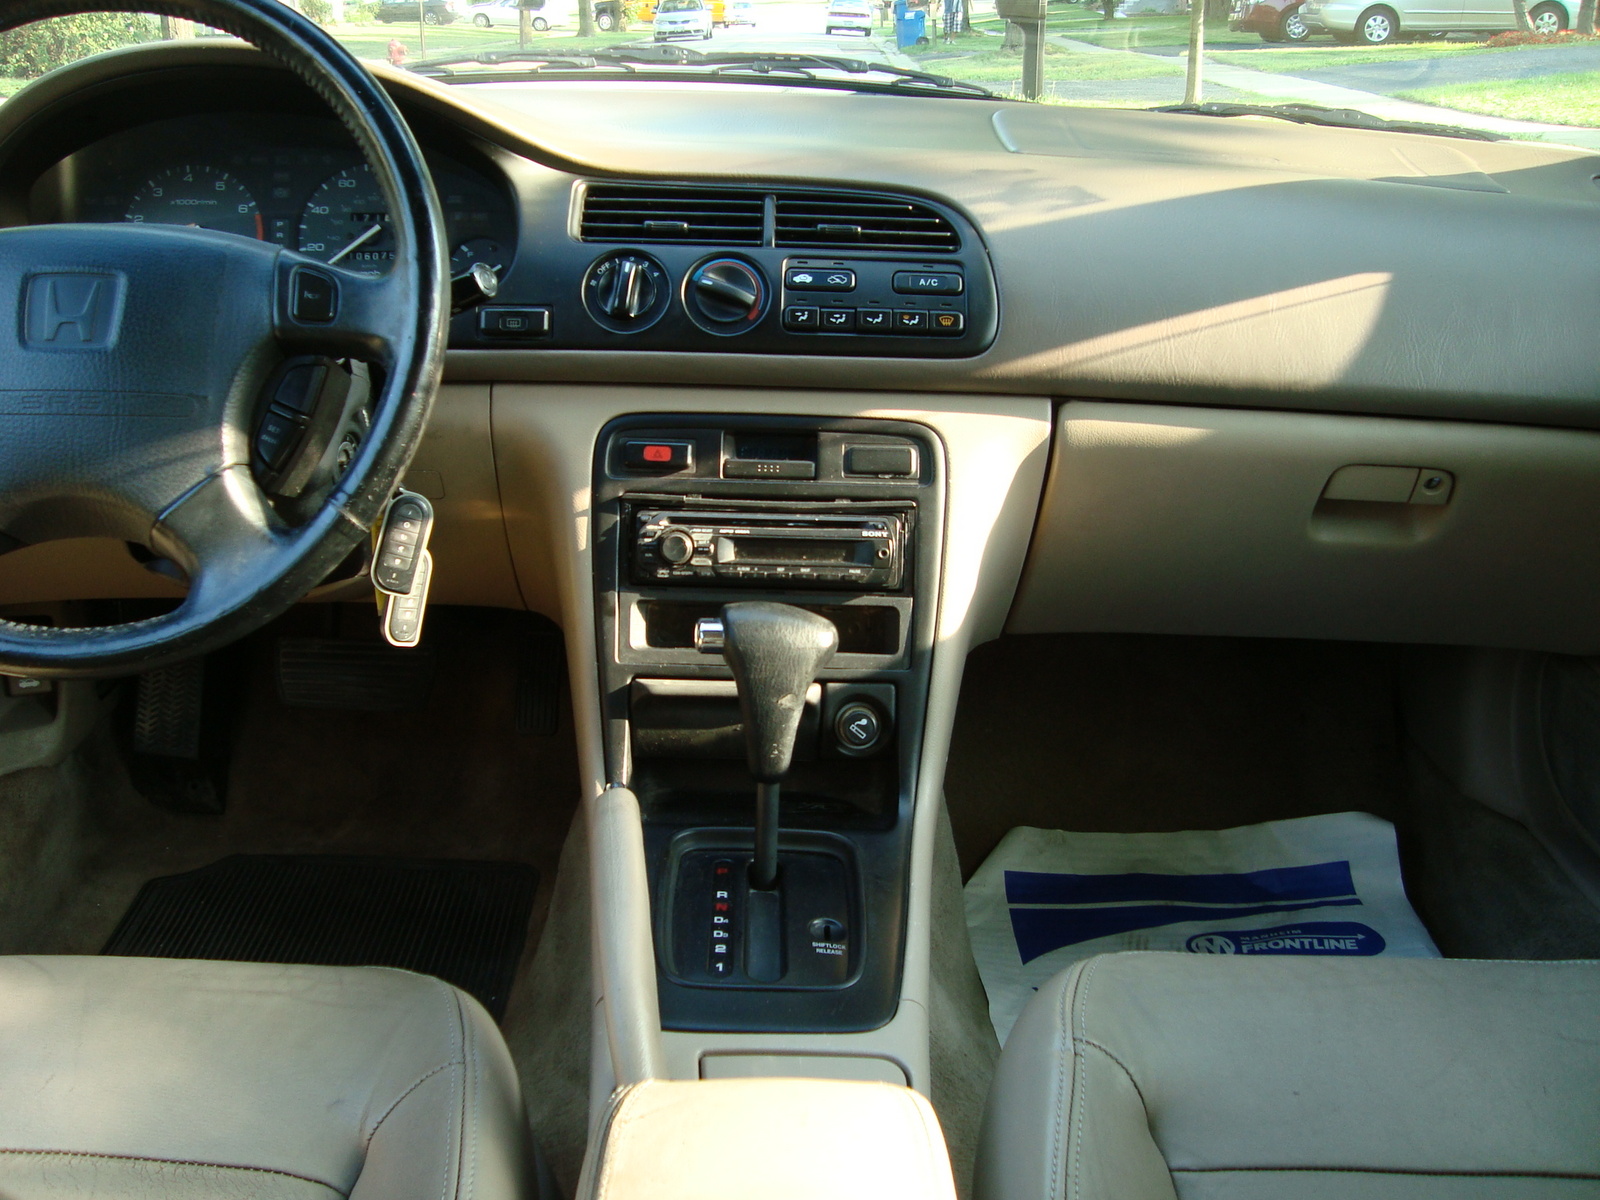 1996 Honda accord custom interior #5